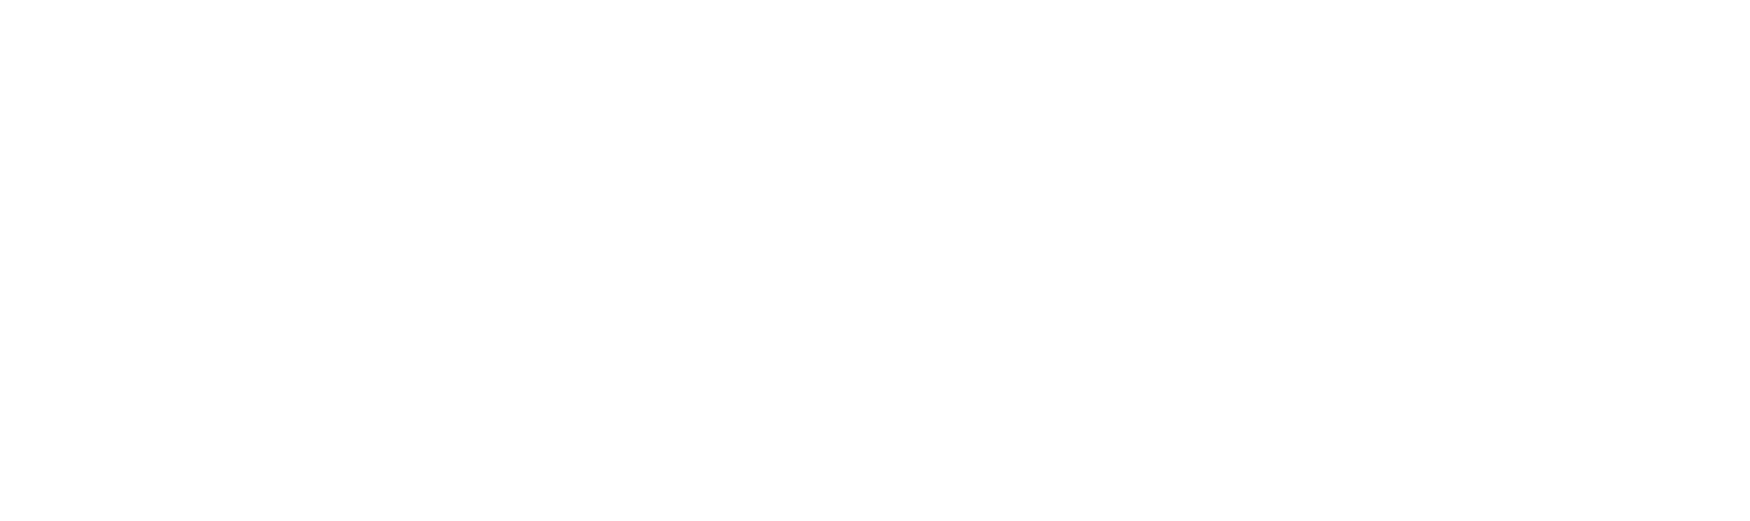 Sigstore Project Logo White